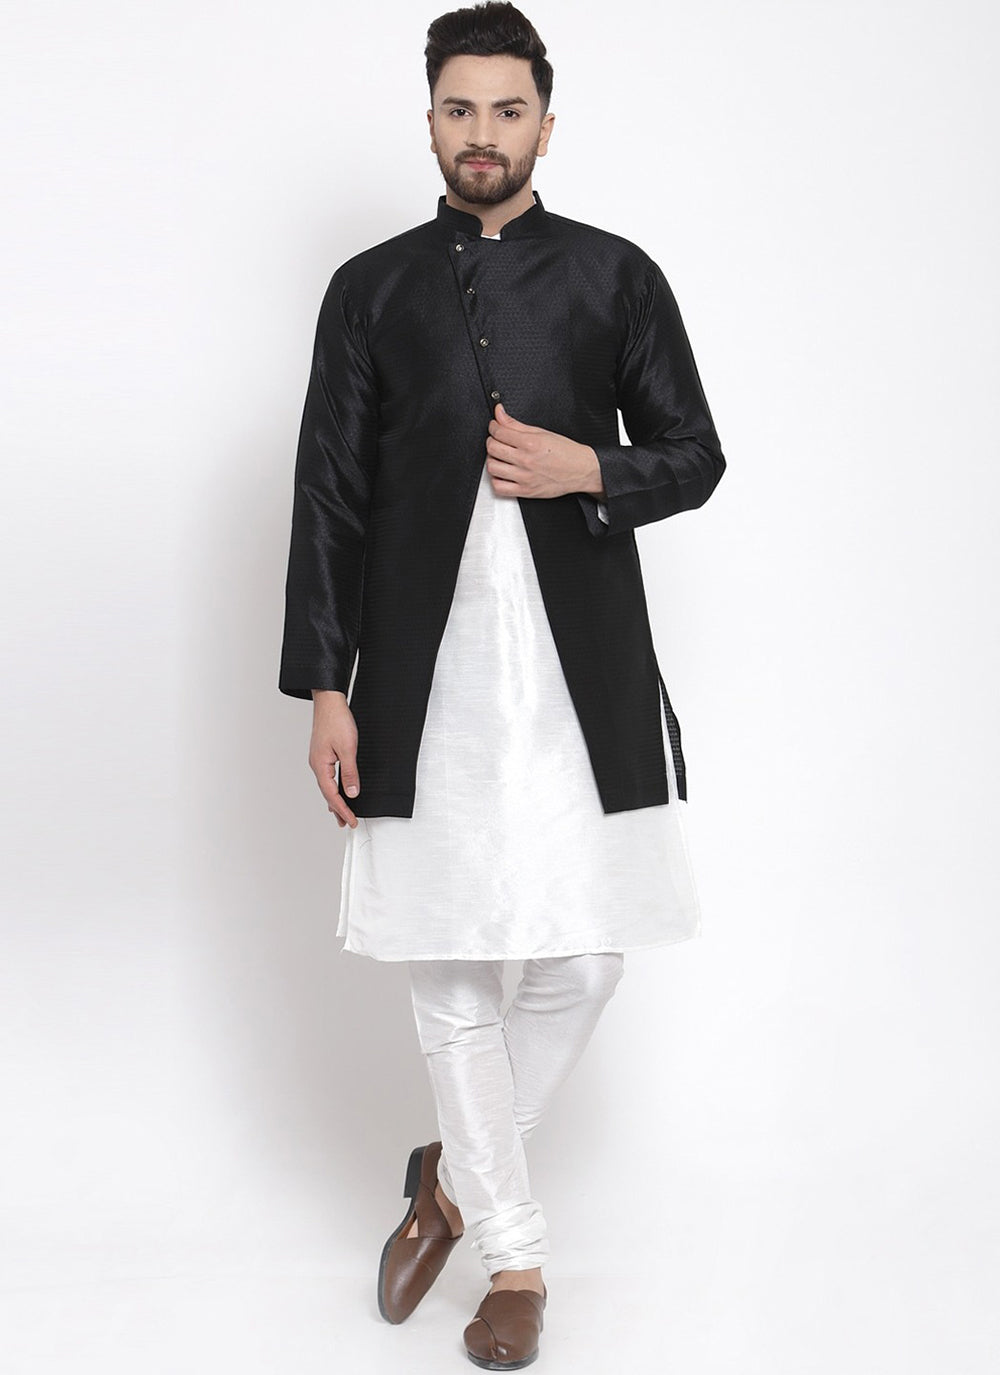 Fancy Black and White Kurta Payjama With Jacket